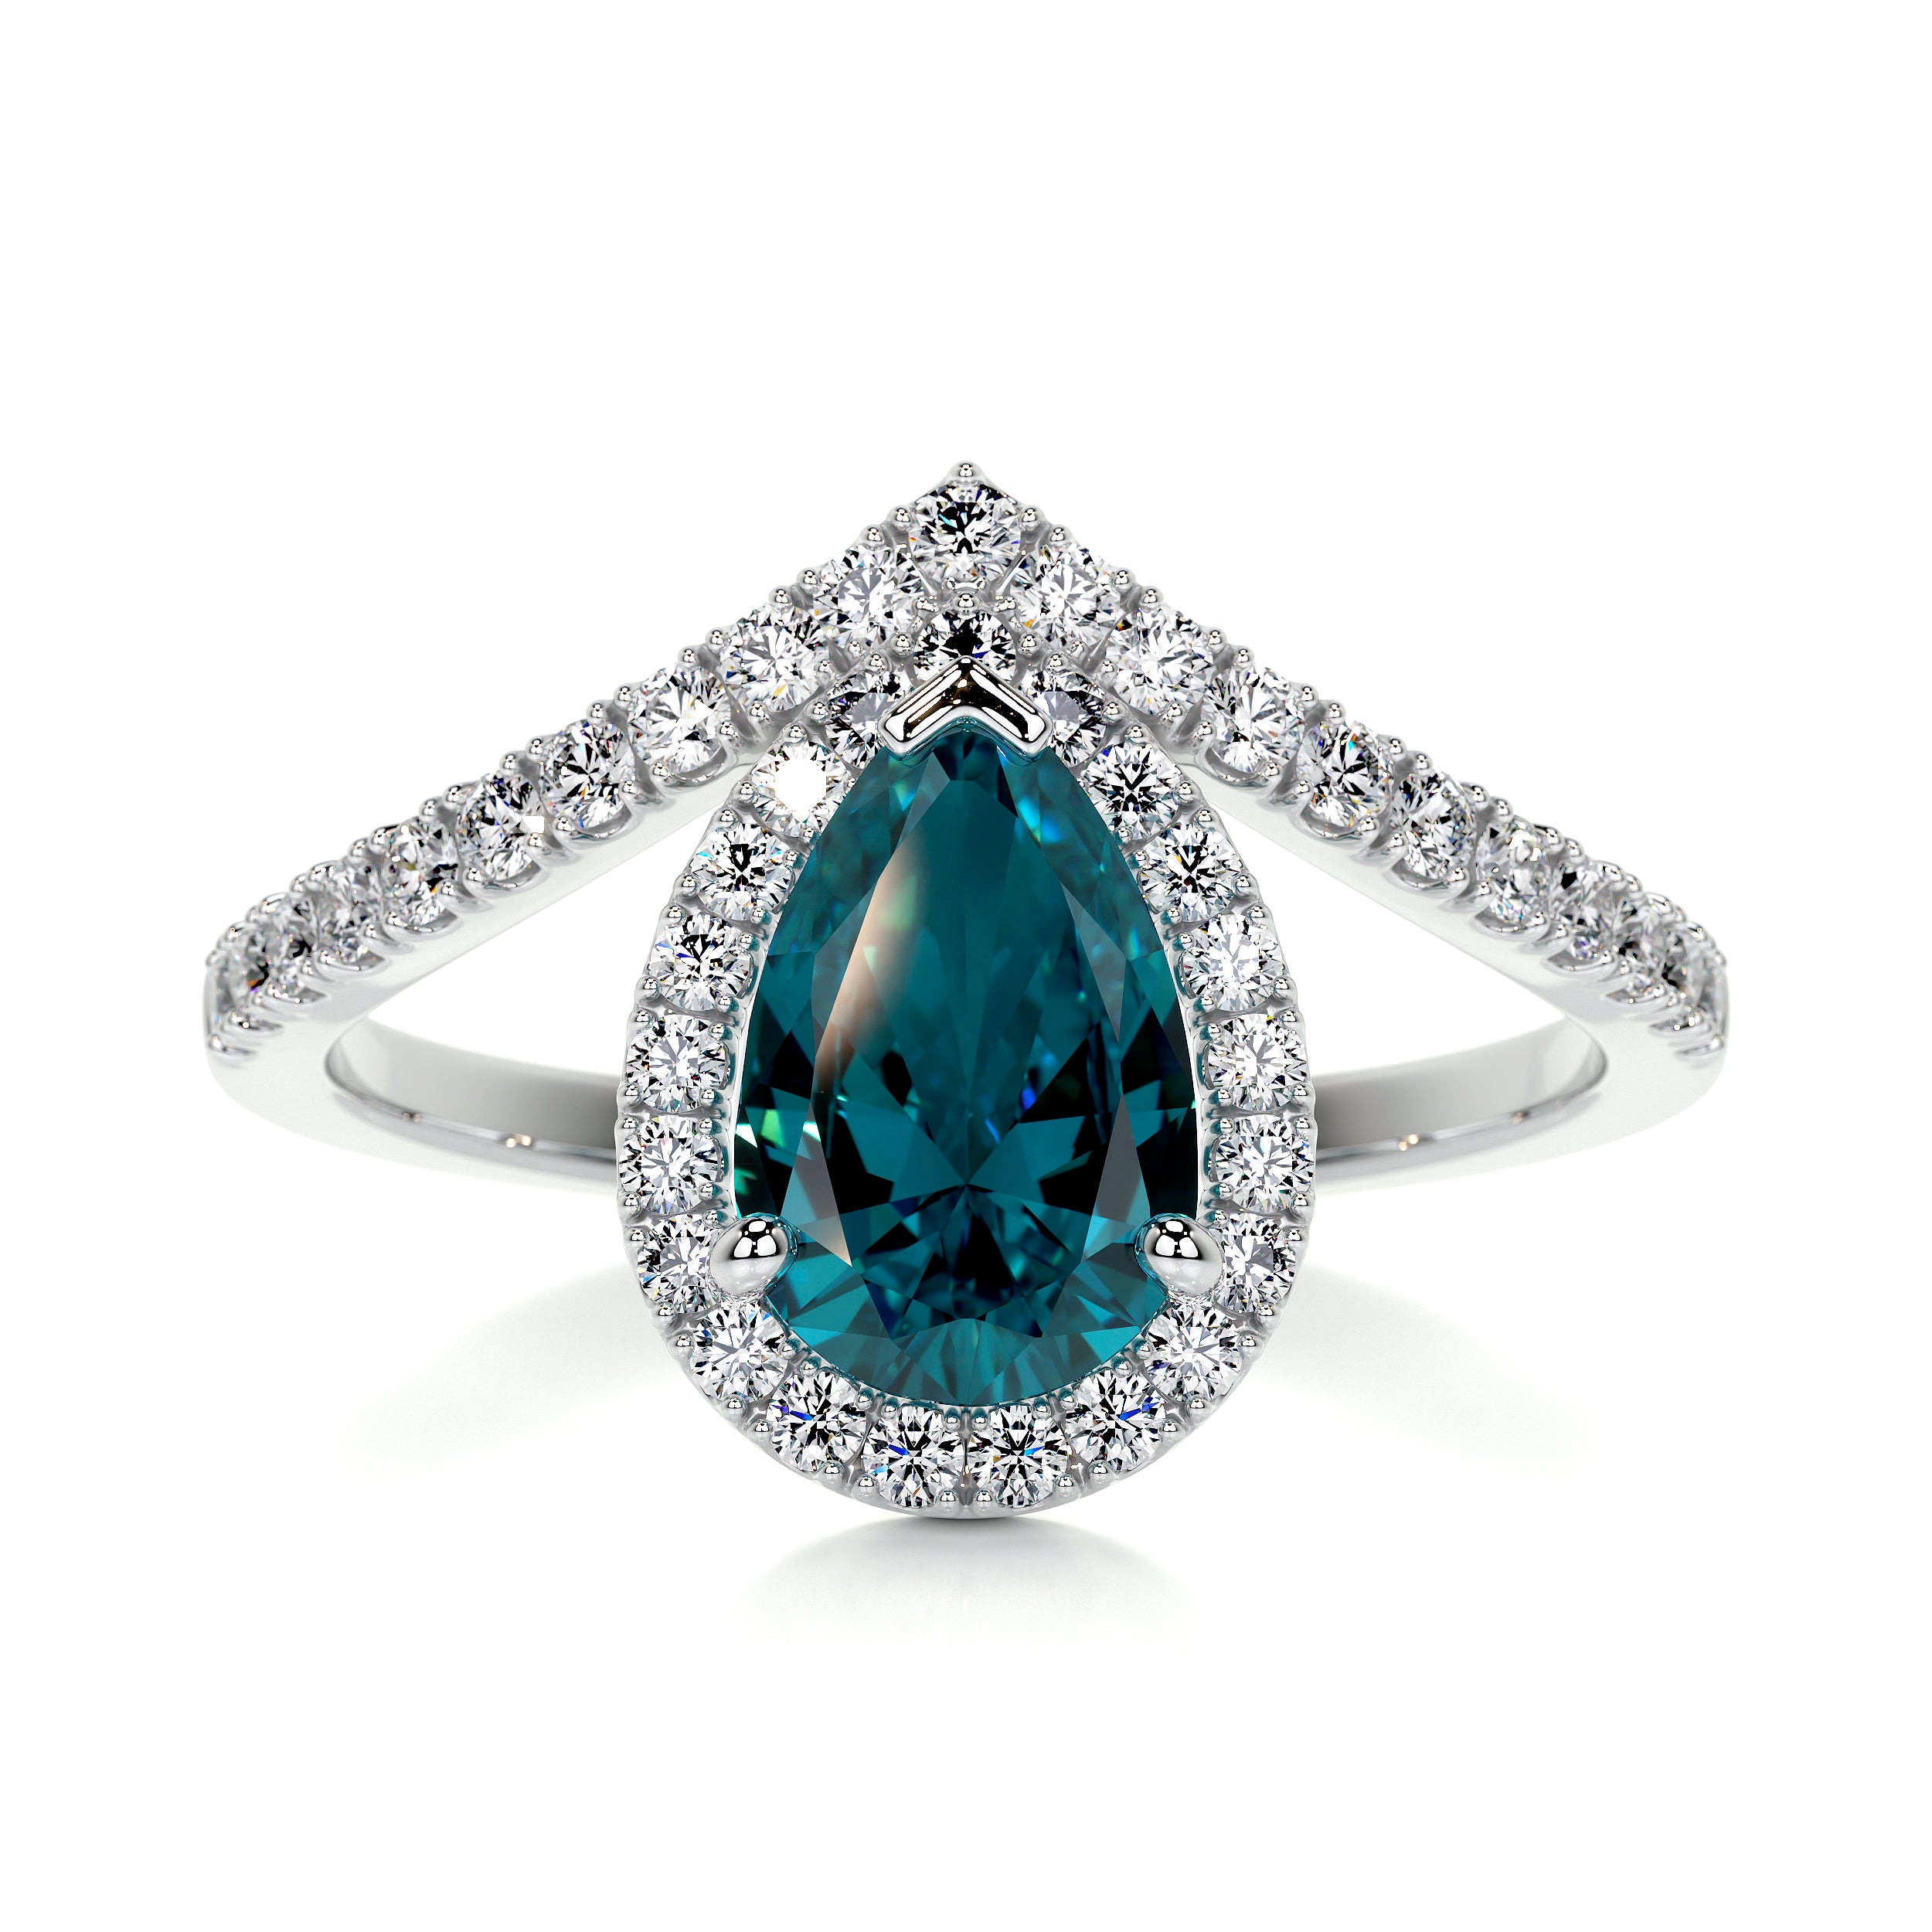 Miranda Diamond Engagement Ring -Platinum